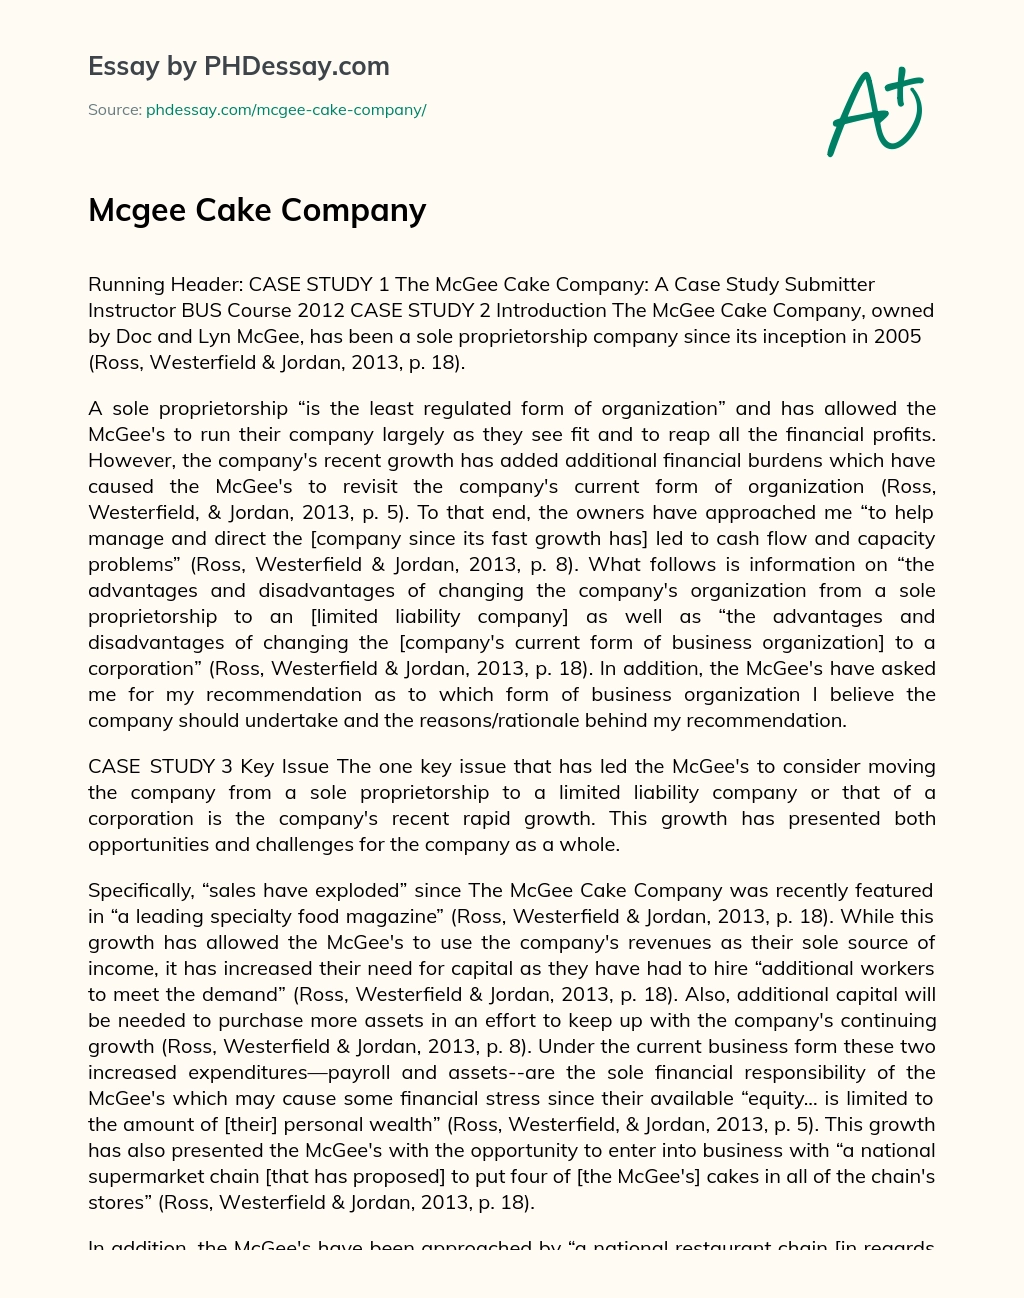 Mcgee Cake Company essay